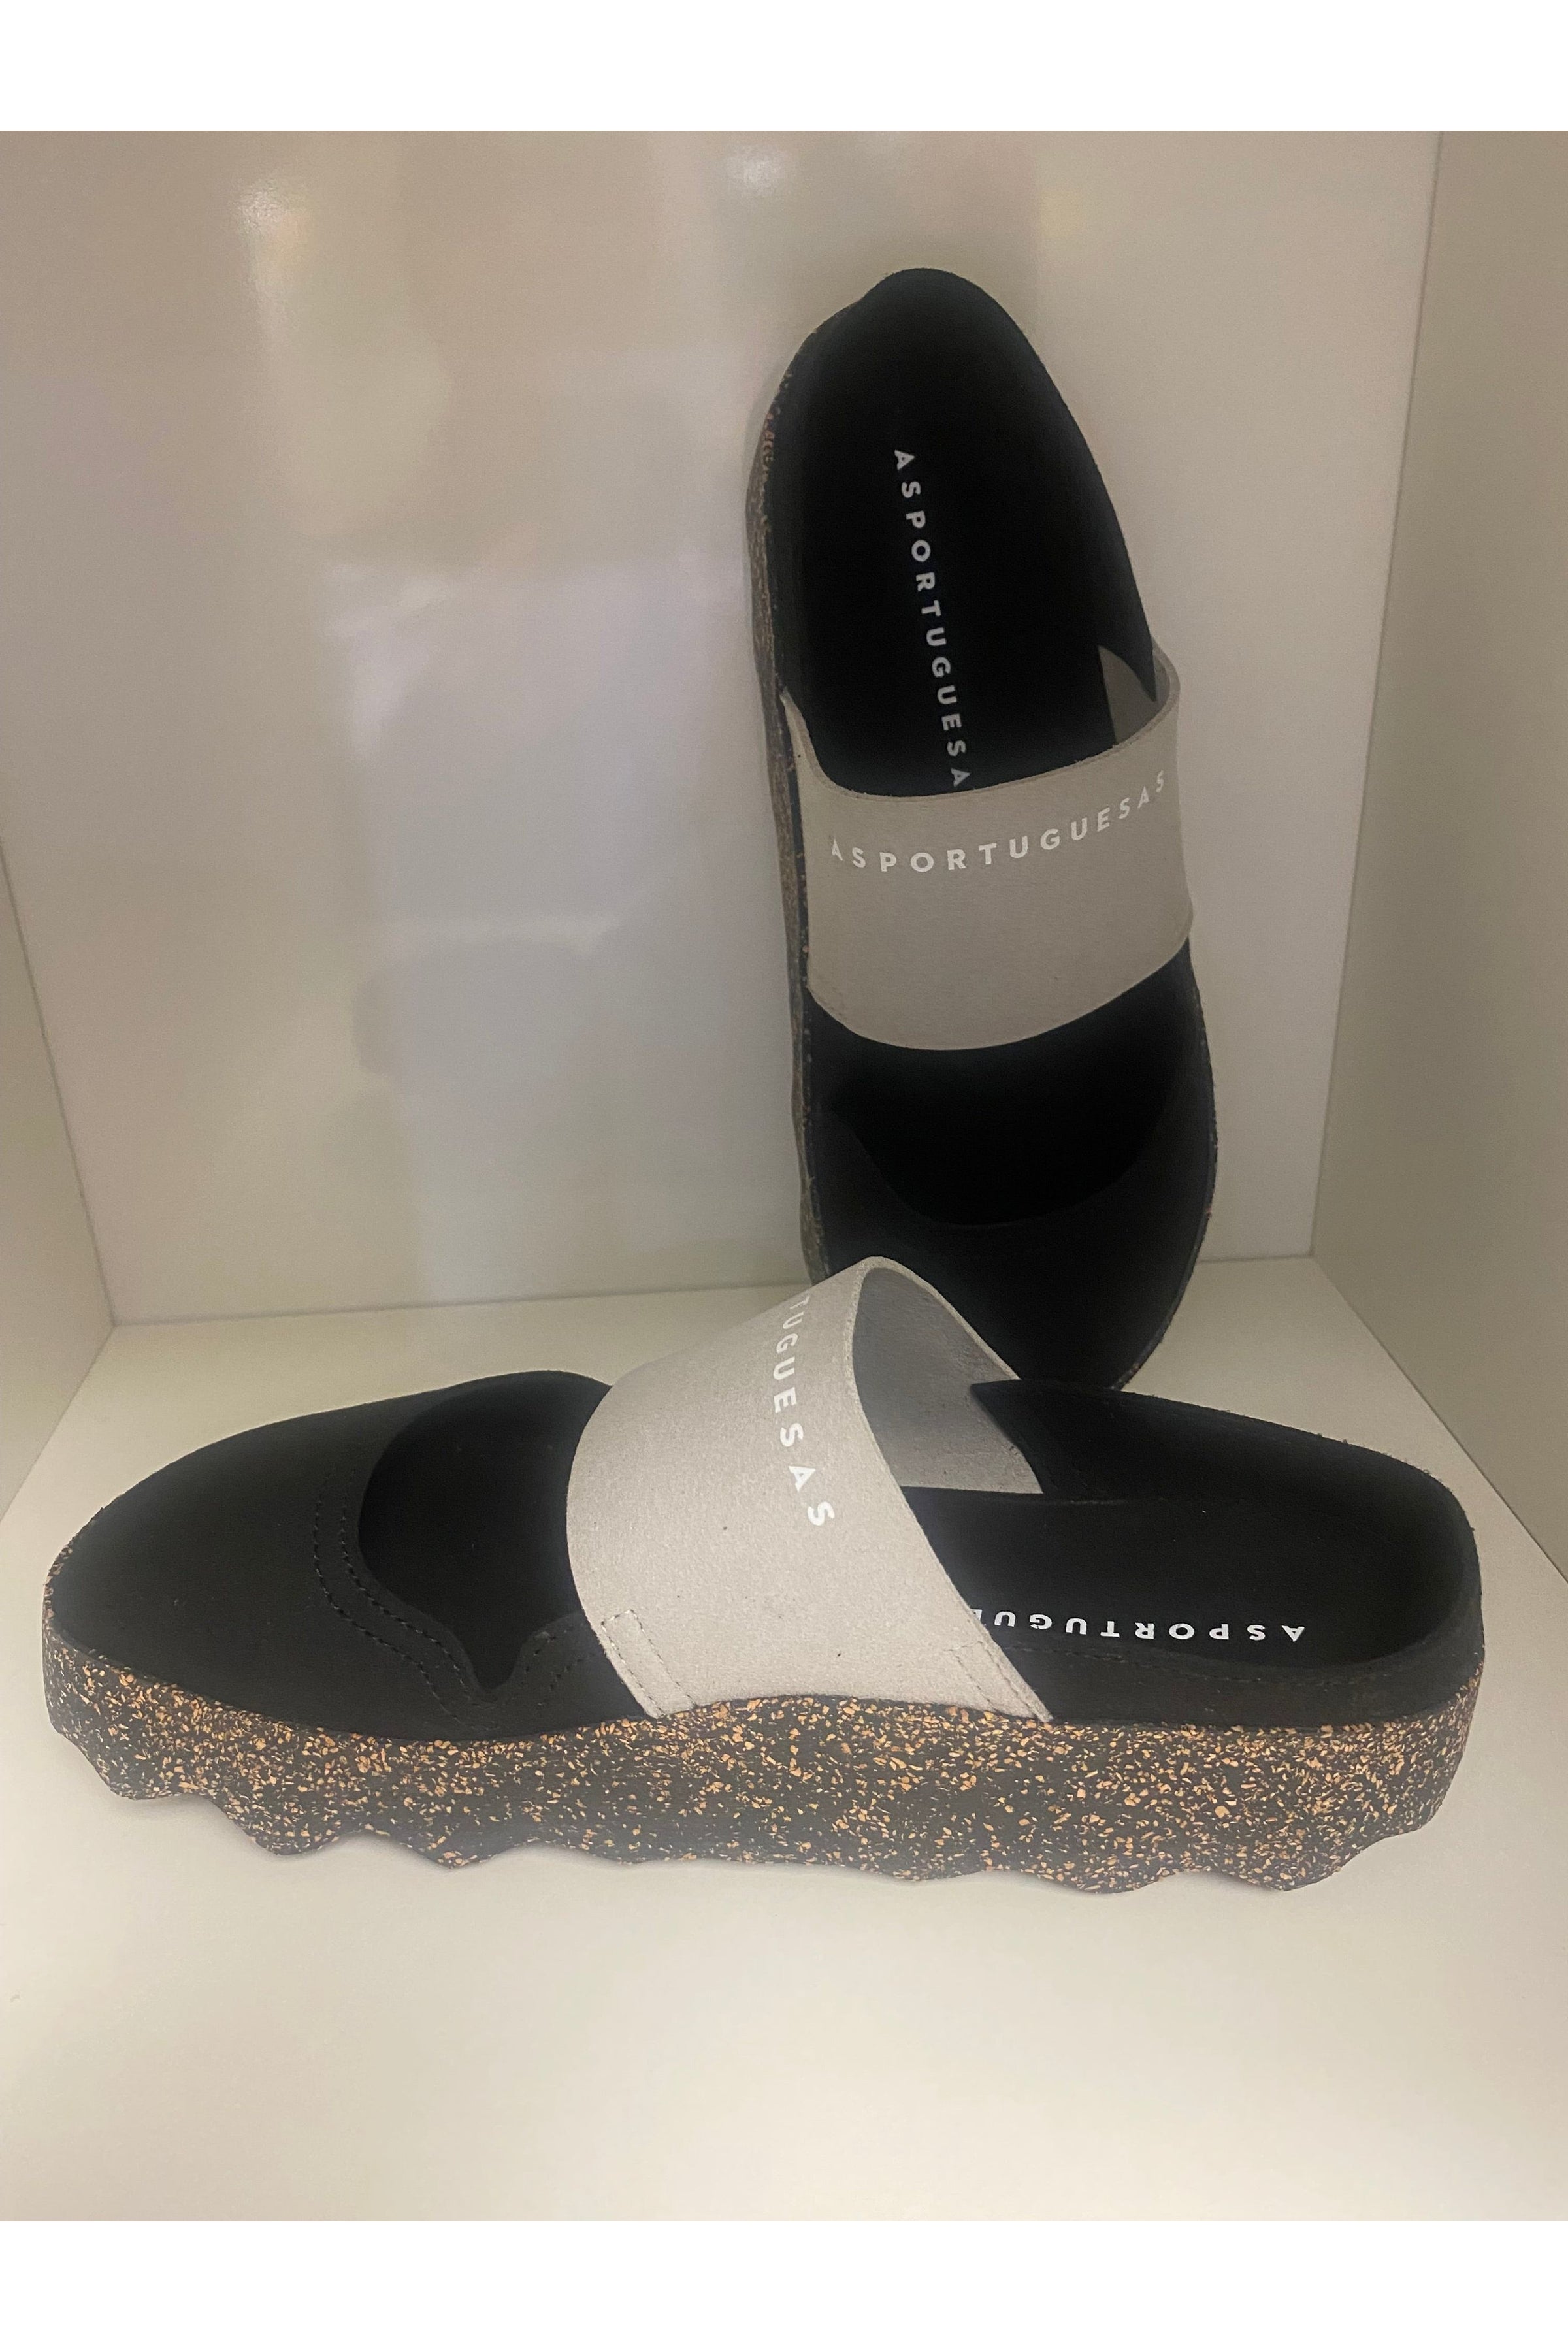 Asportuguesas Slip On Sandal - Style Cana, black, fig4